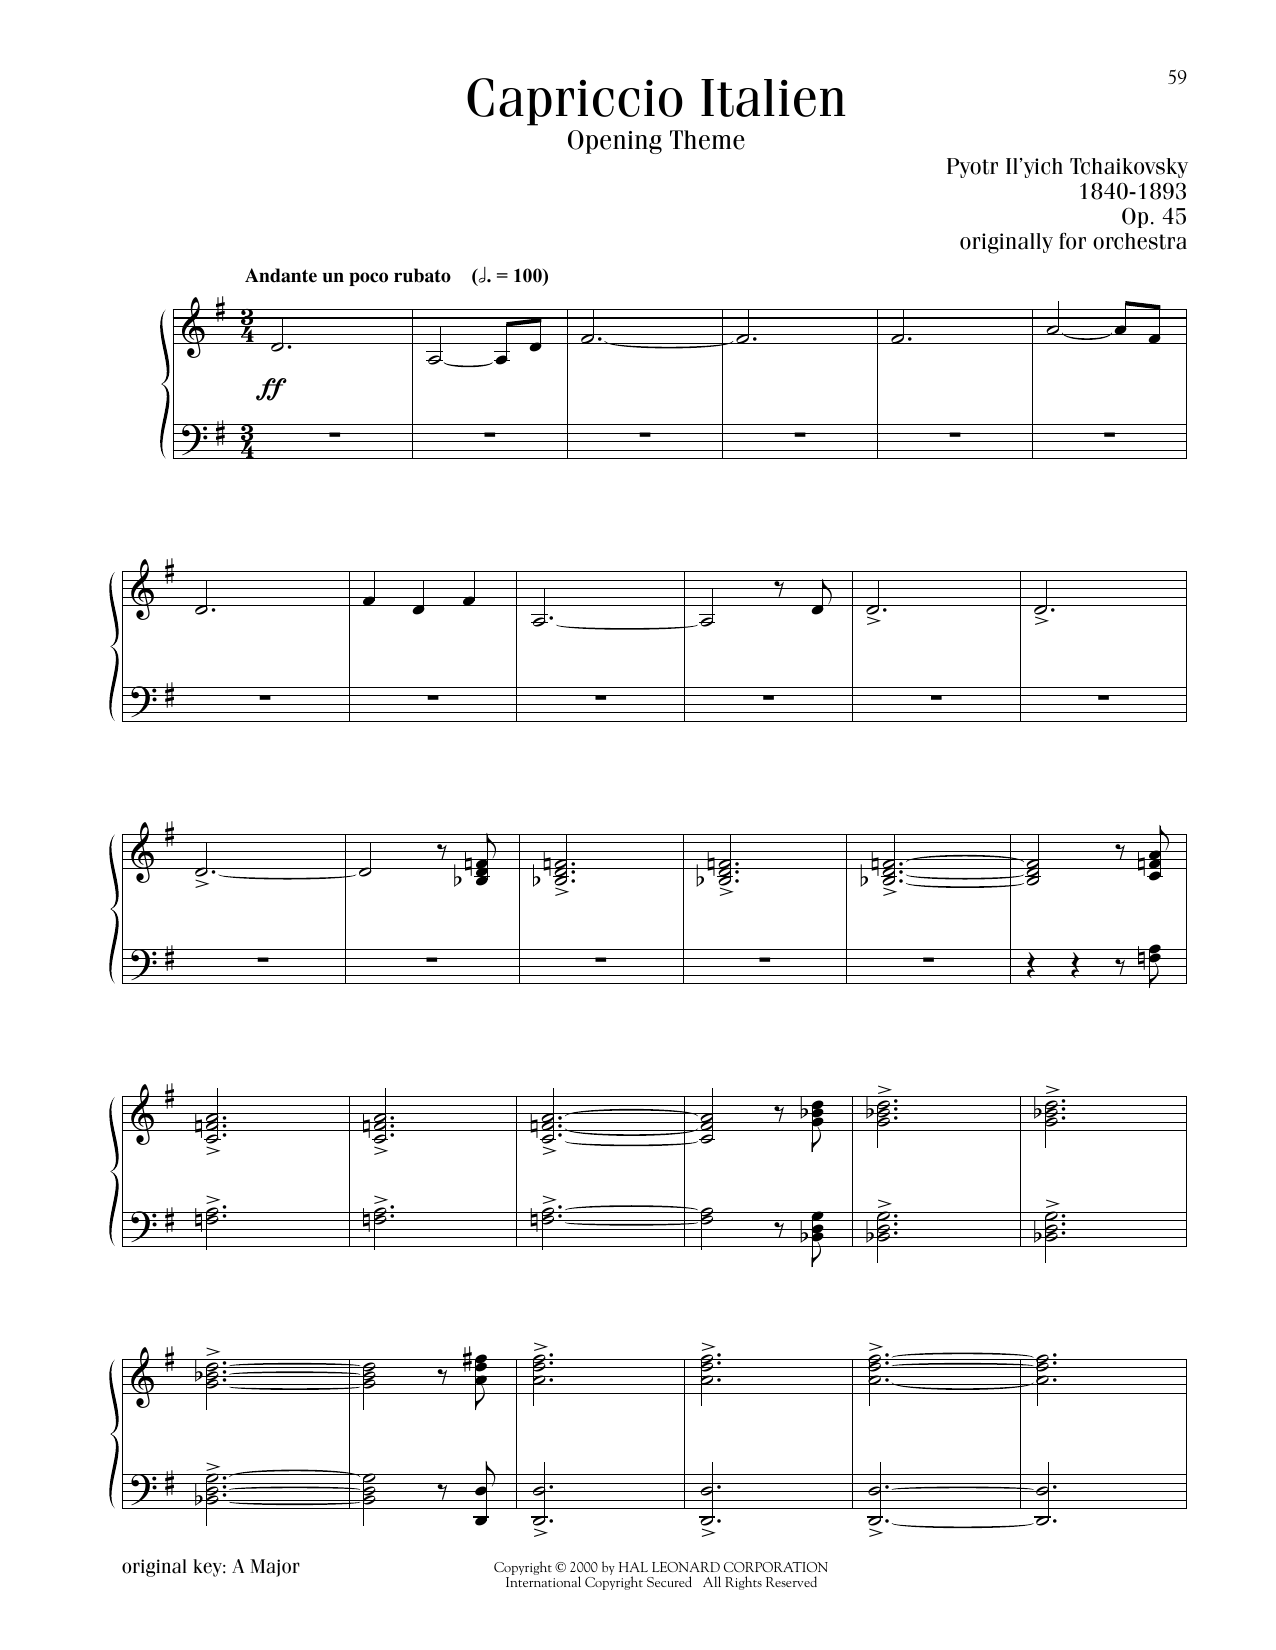 Pyotr Il'yich Tchaikovsky Capriccio Italien, OP. 45 sheet music notes printable PDF score